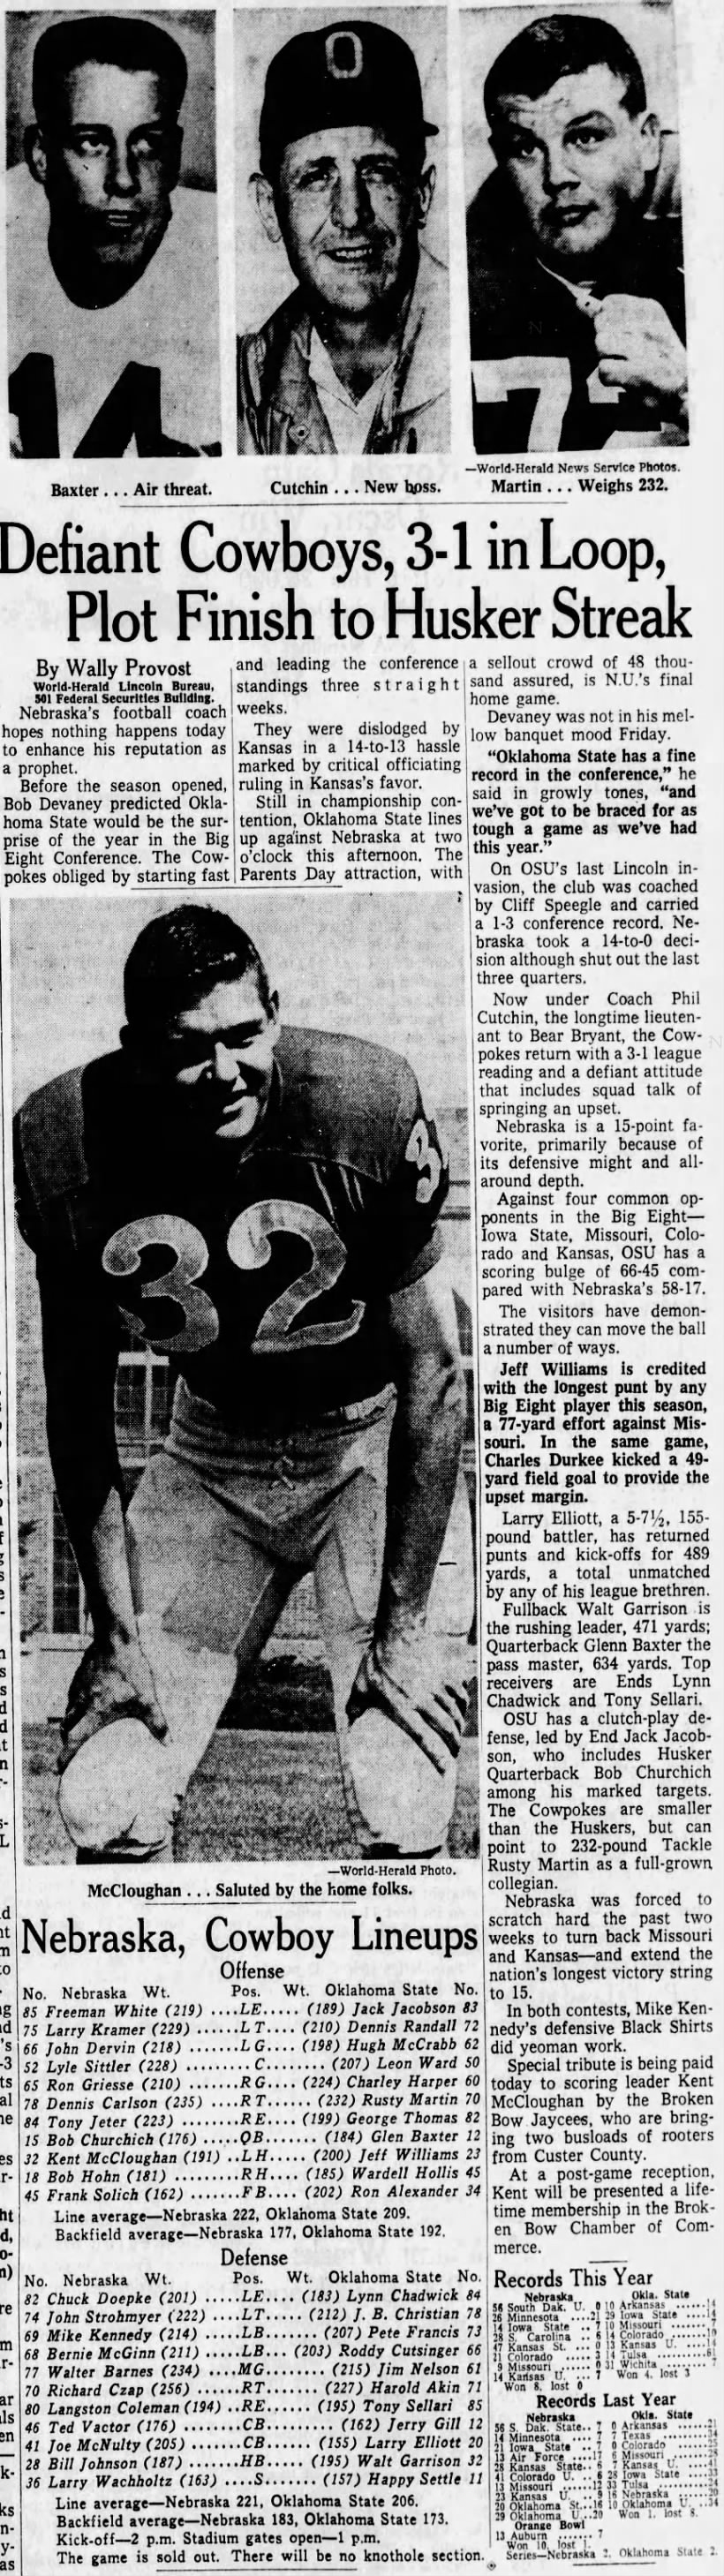 1964 Nebraska-Oklahoma State football game preview and lineups